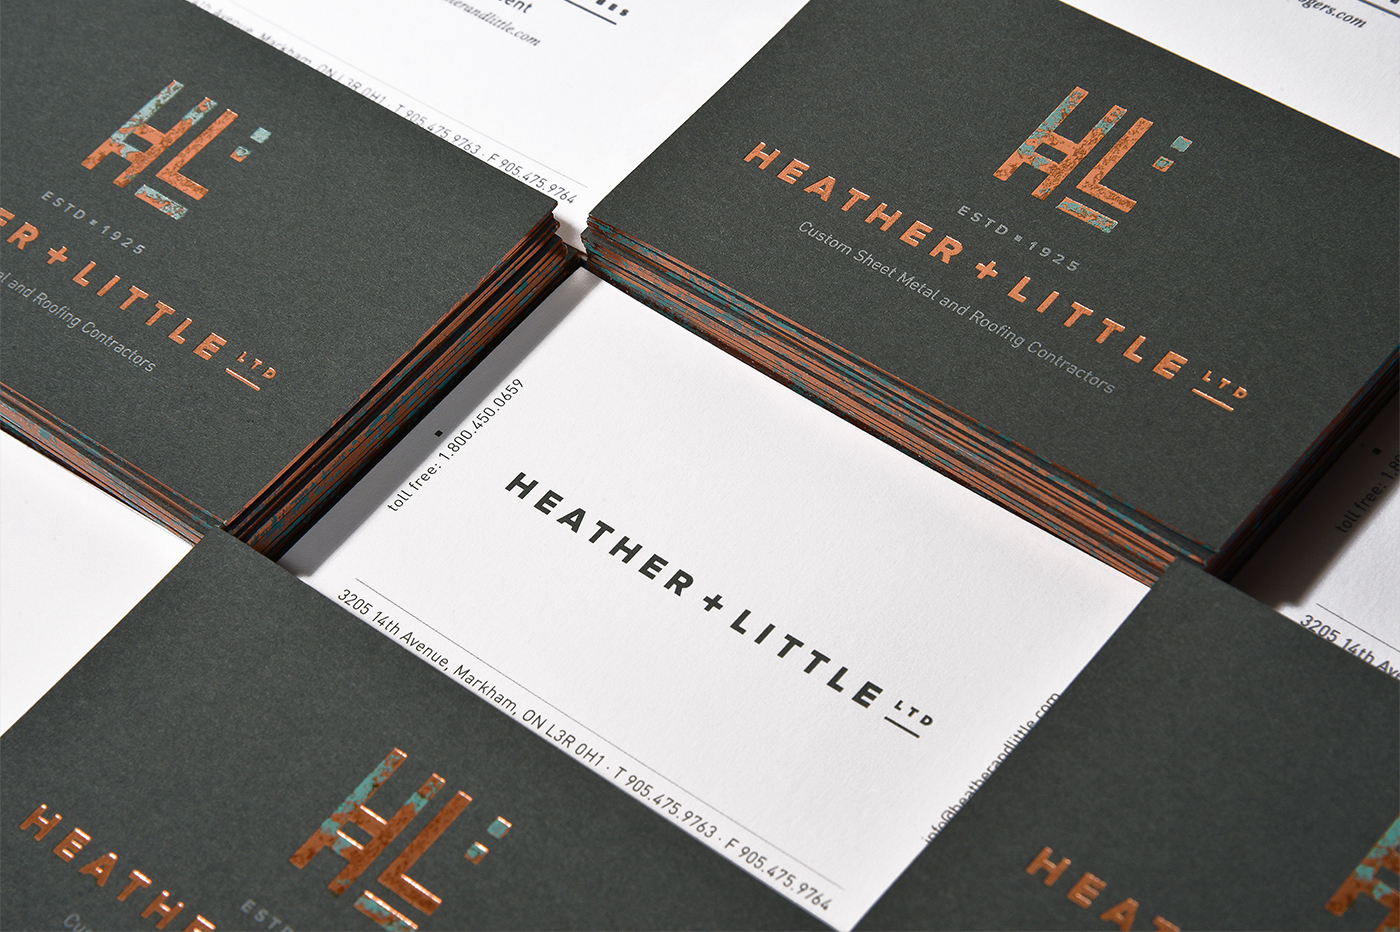 Heather&Little H&L identity Stationery letterpress foil print elegant traditional modern metal copper Custom Craftmanship architectural